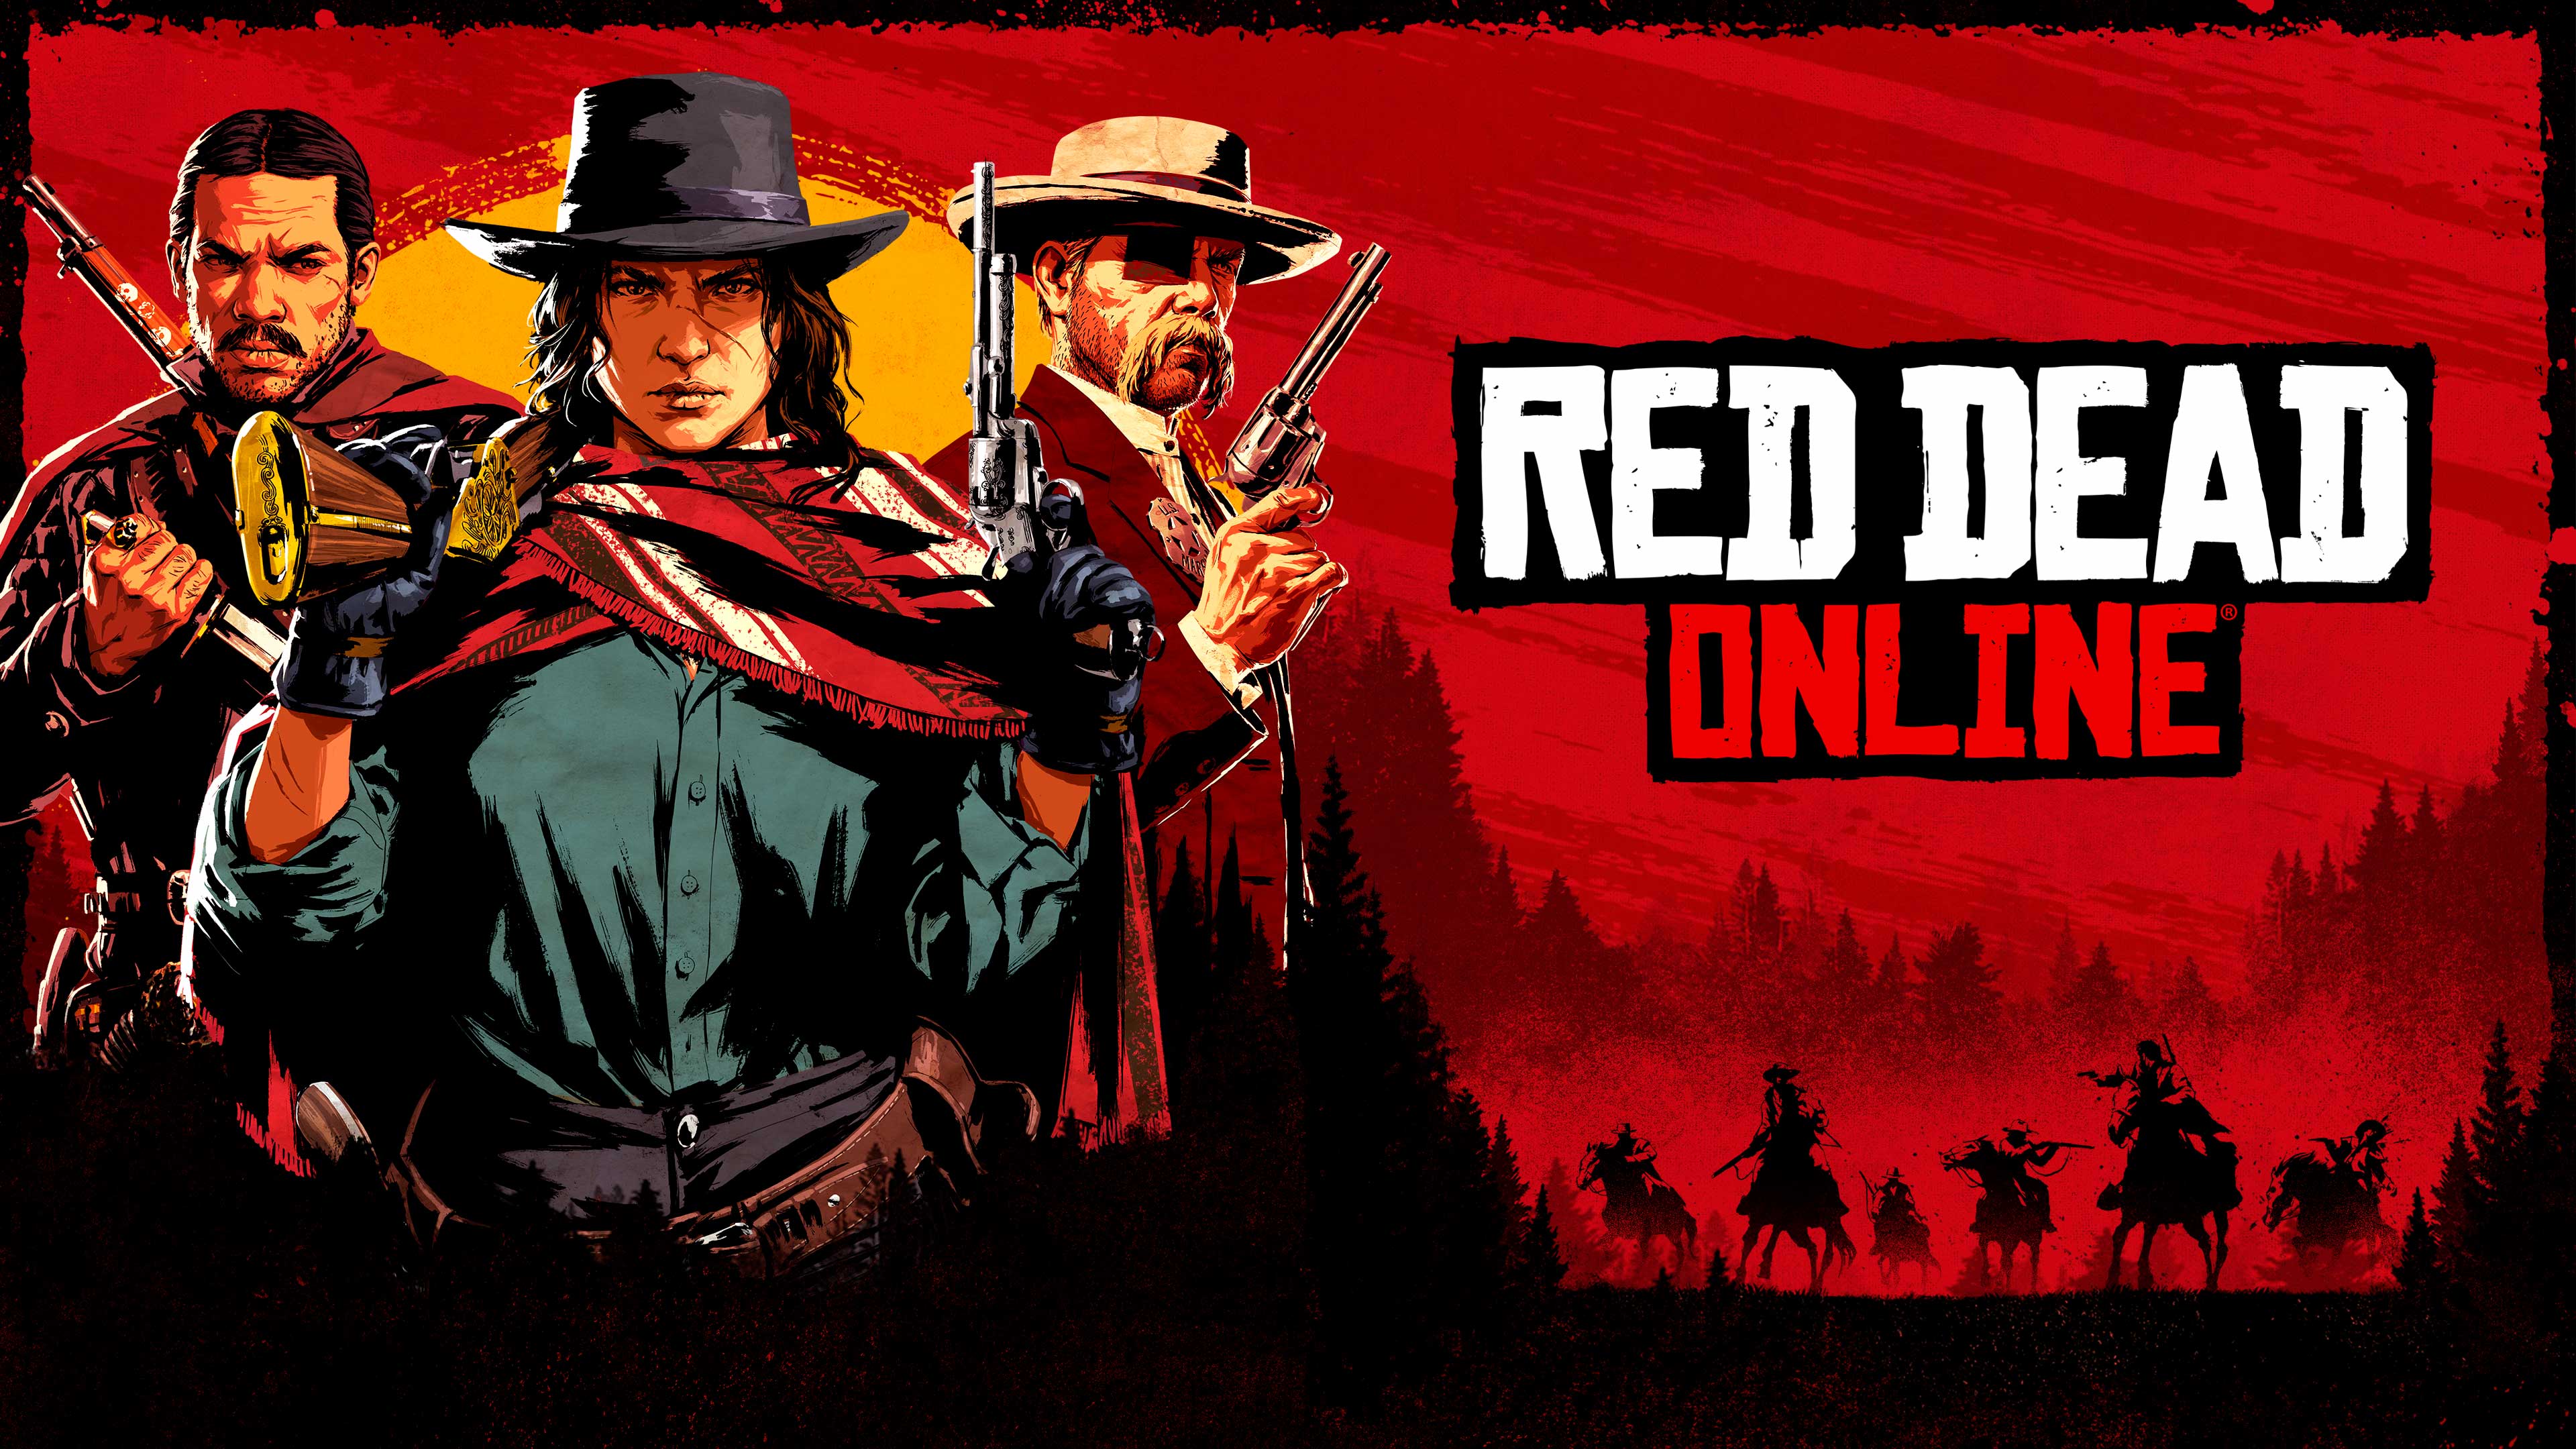 Rockstar is on Red Dead Online KitGuru